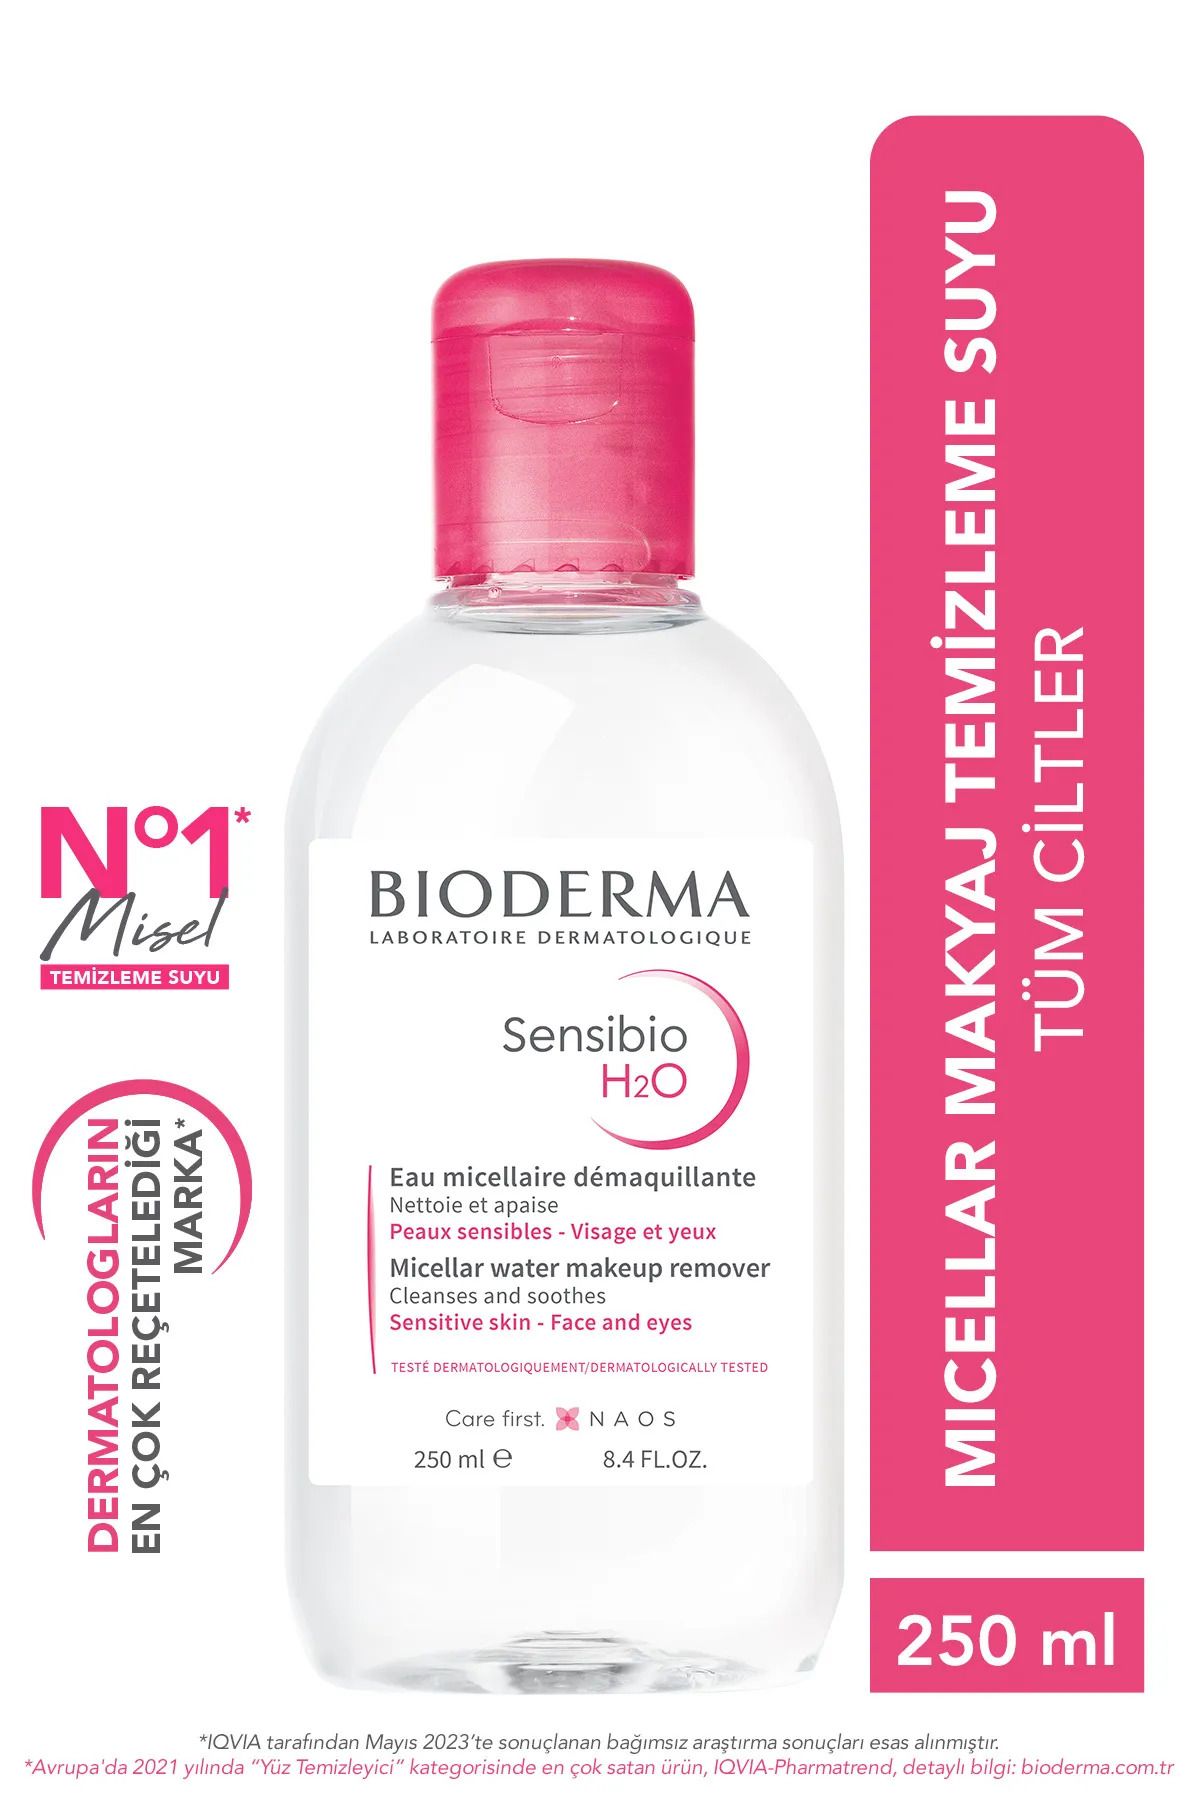 Bioderma Sensibio H2O Hassas ve Normal Ciltler için Micellar Makyaj Temizleme Suyu 250 ml